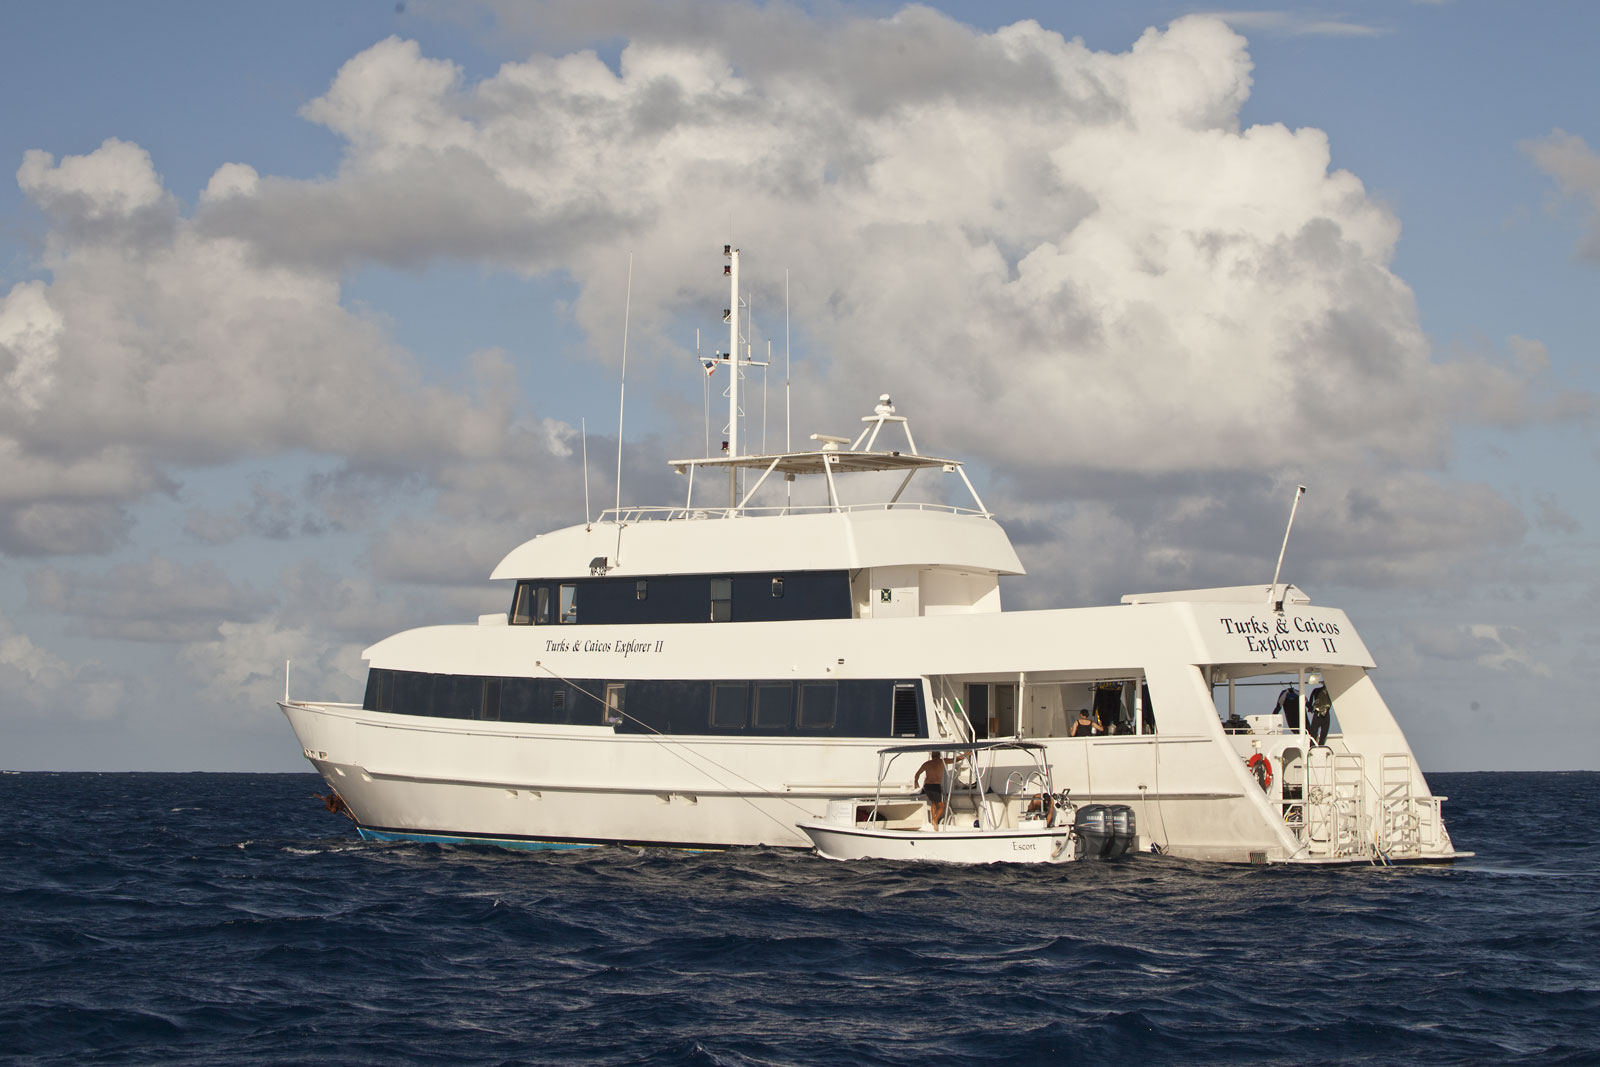 Ship Turks & Caicos Explorer II with Cheesemans’ Ecology Safaris